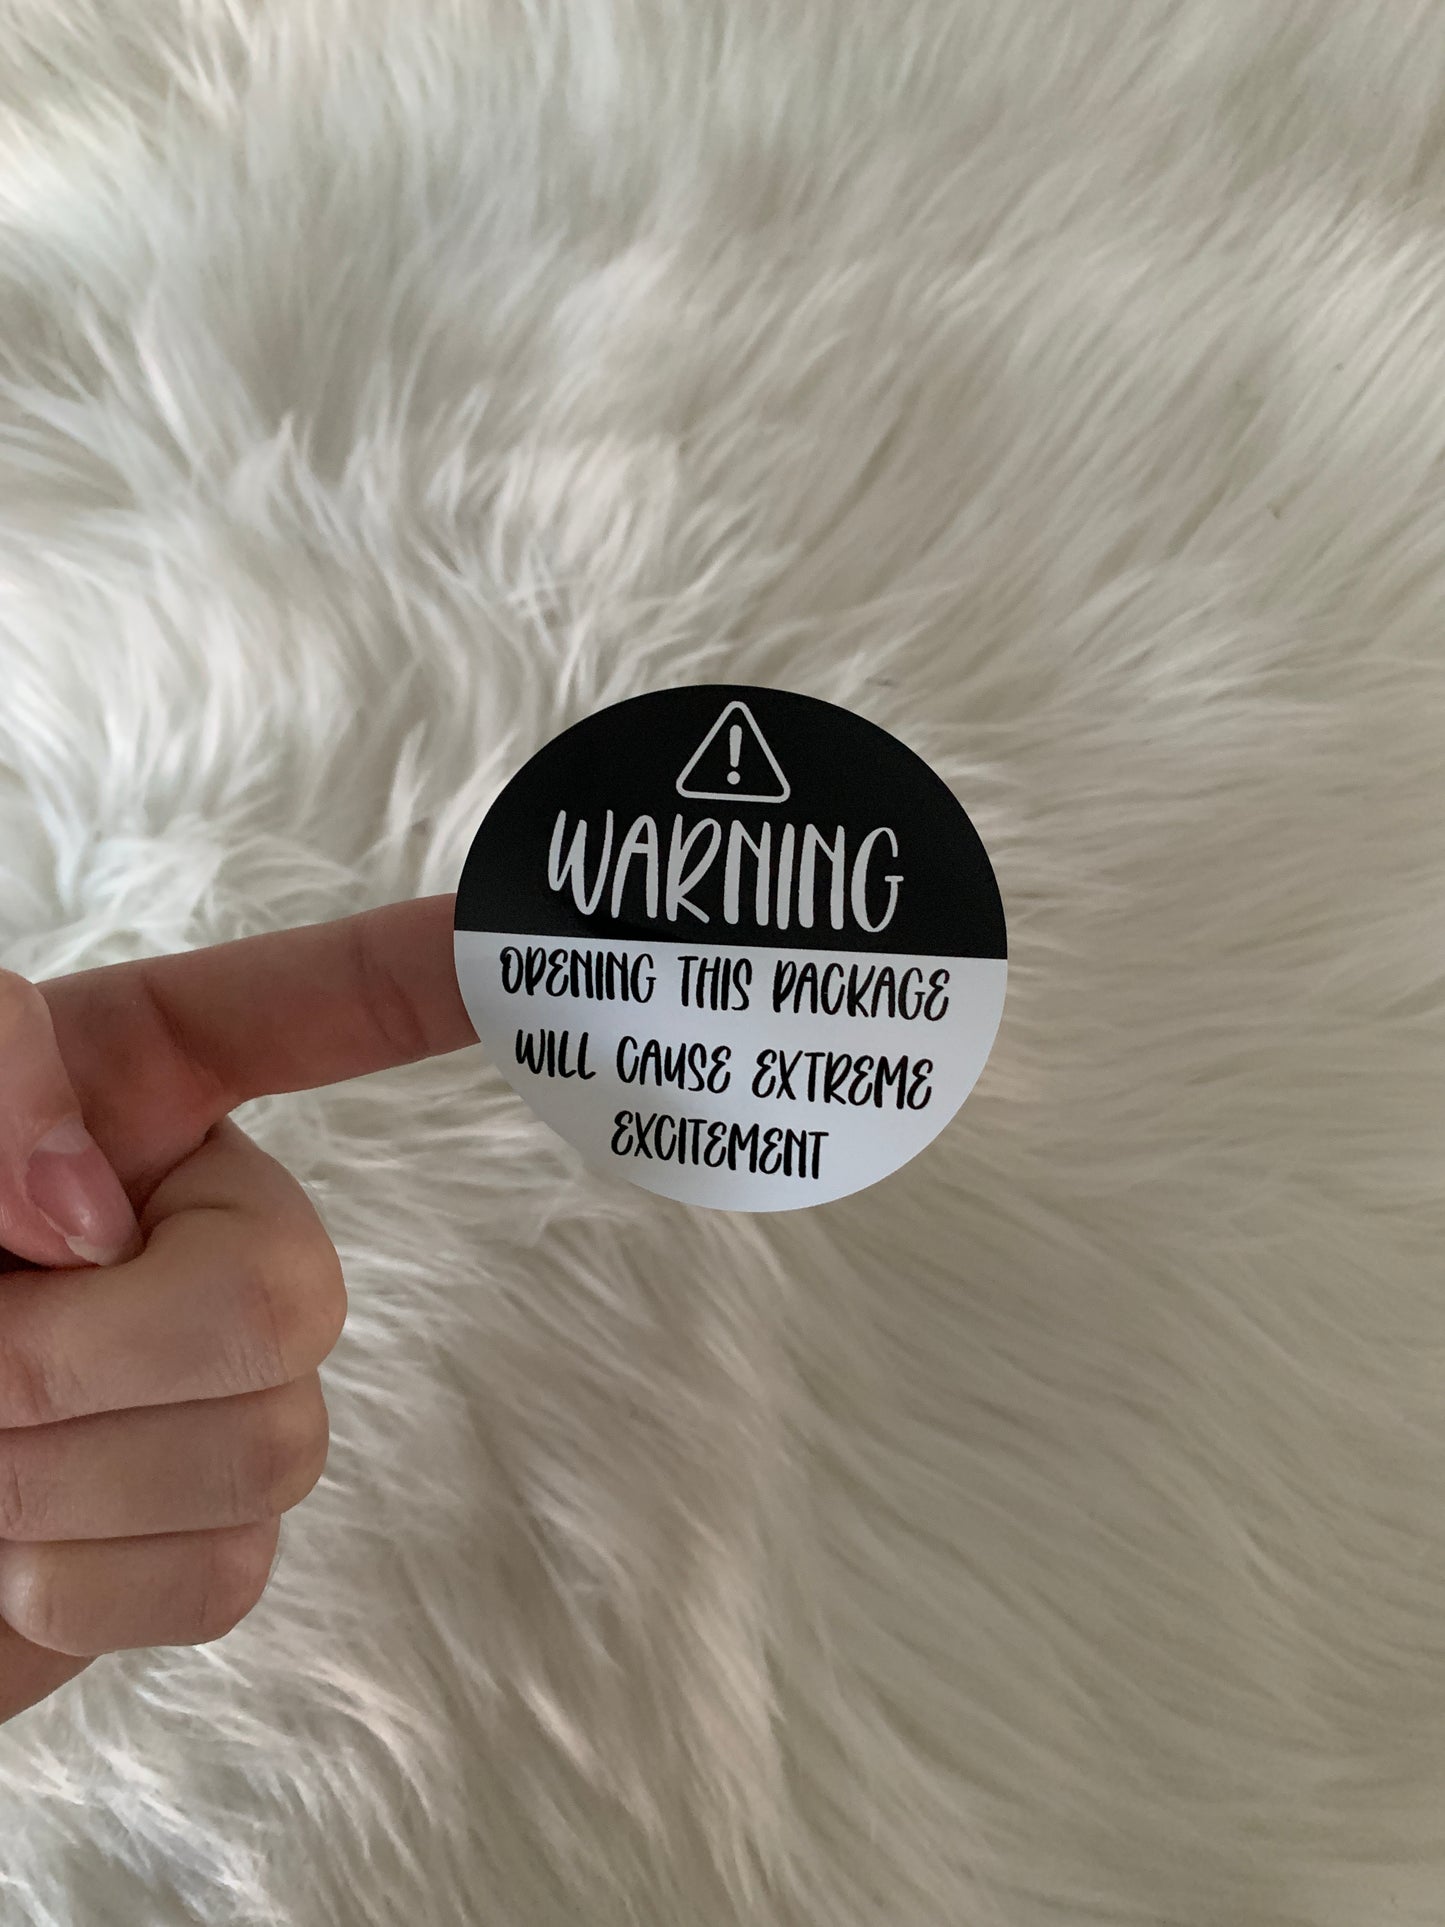 Warning Small Business Shipping Sticker